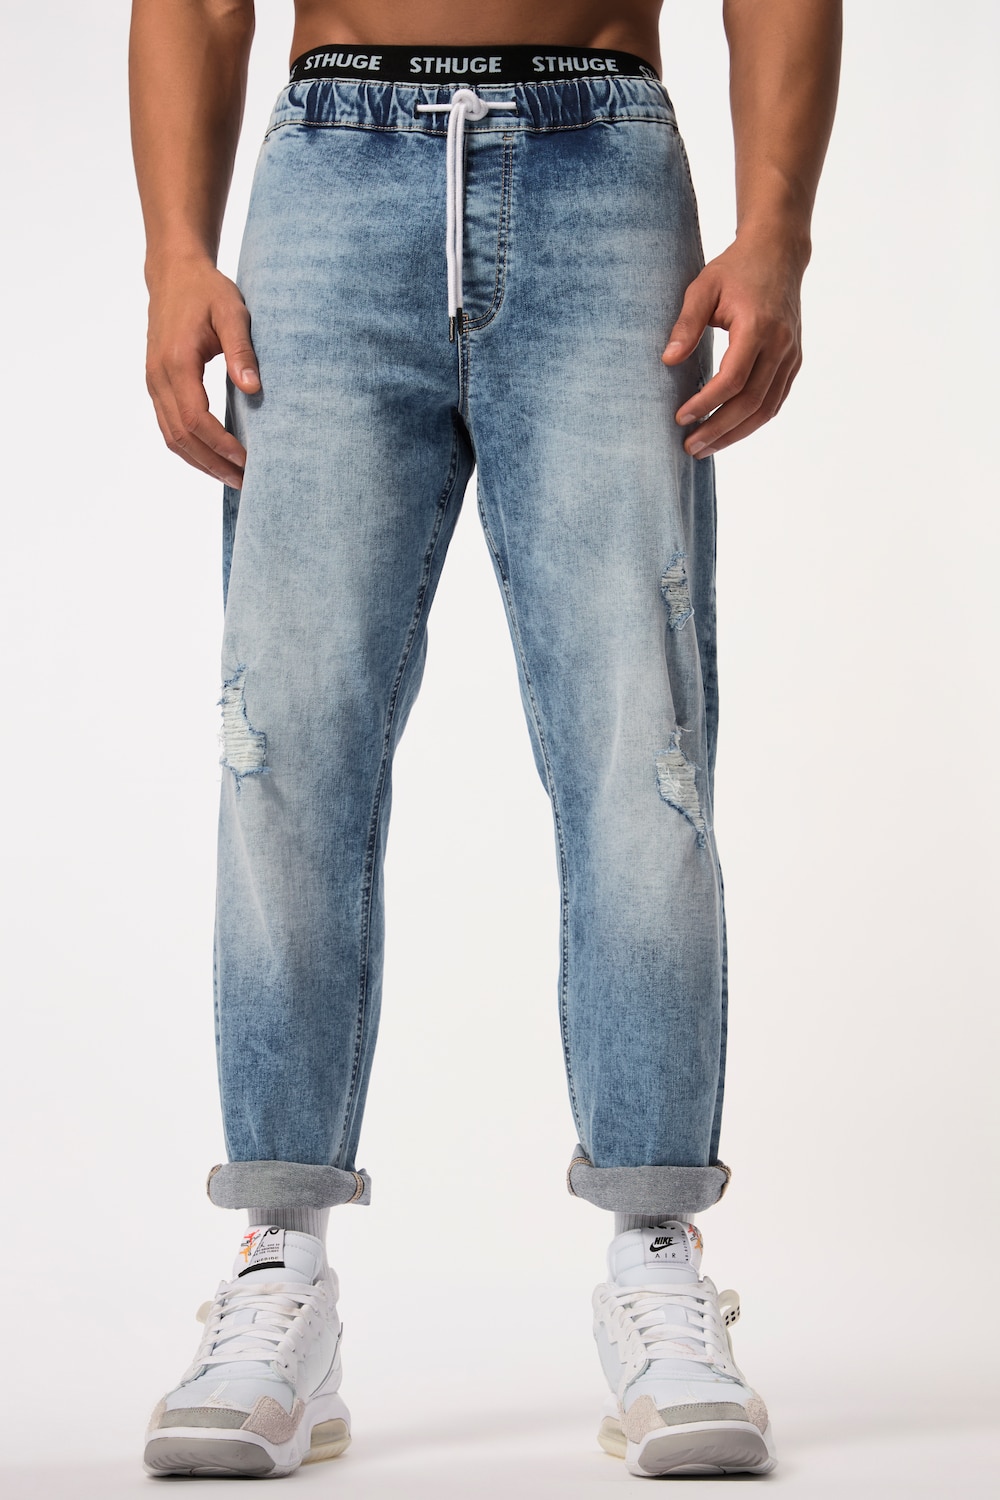 Grote Maten STHUGE jeans FLEXLASTIC®male, blauw, Maat: 6XL, Katoen, STHUGE